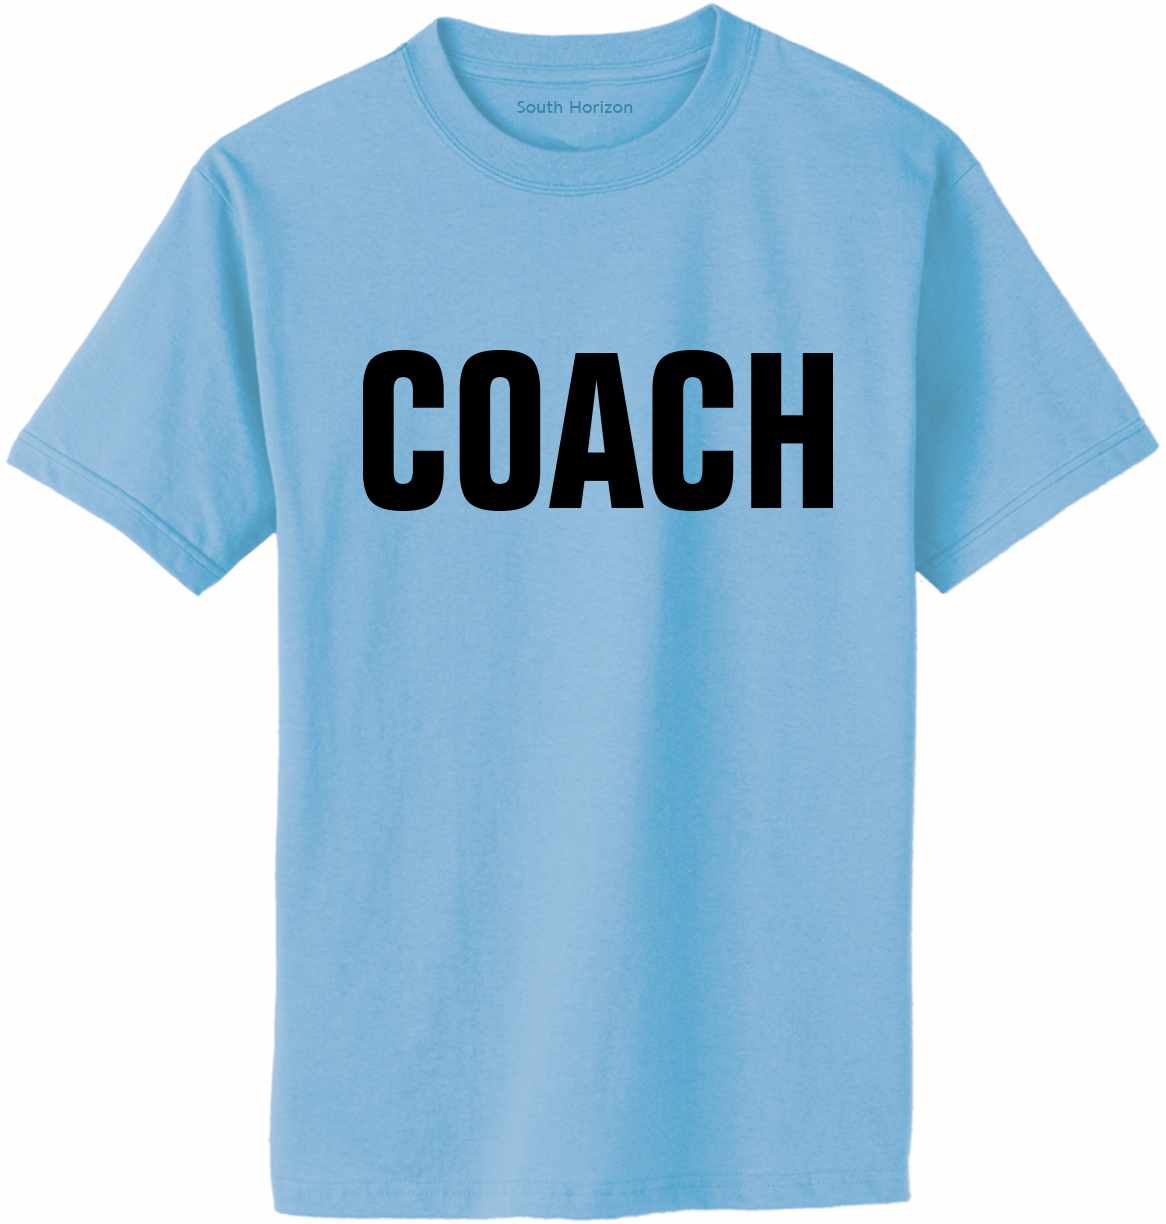 COACH Adult T-Shirt